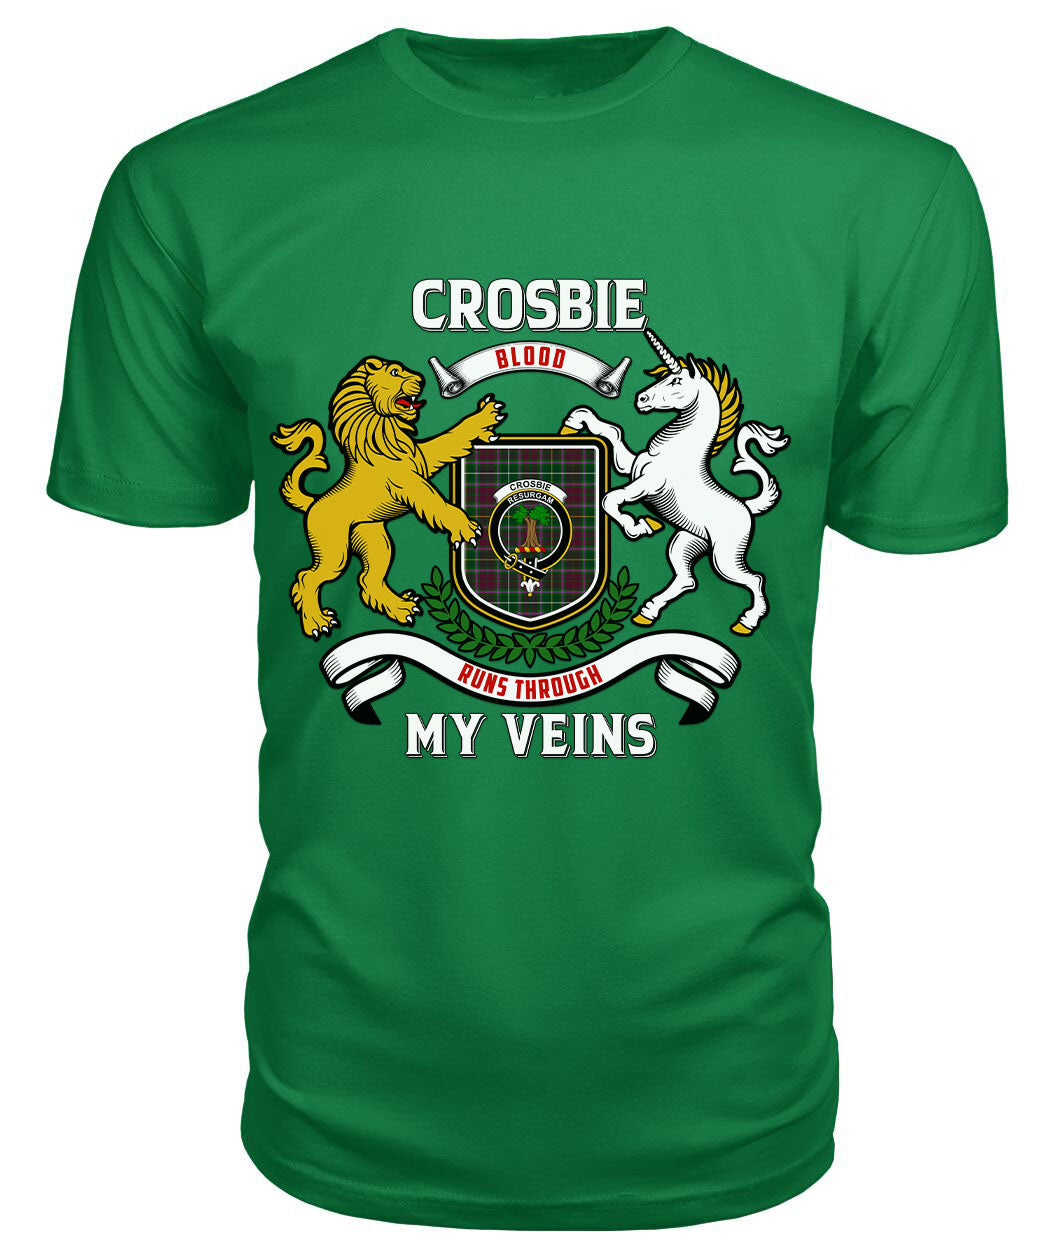 Crosbie (or Crosby) Tartan Crest 2D T-shirt - Blood Runs Through My Veins Style